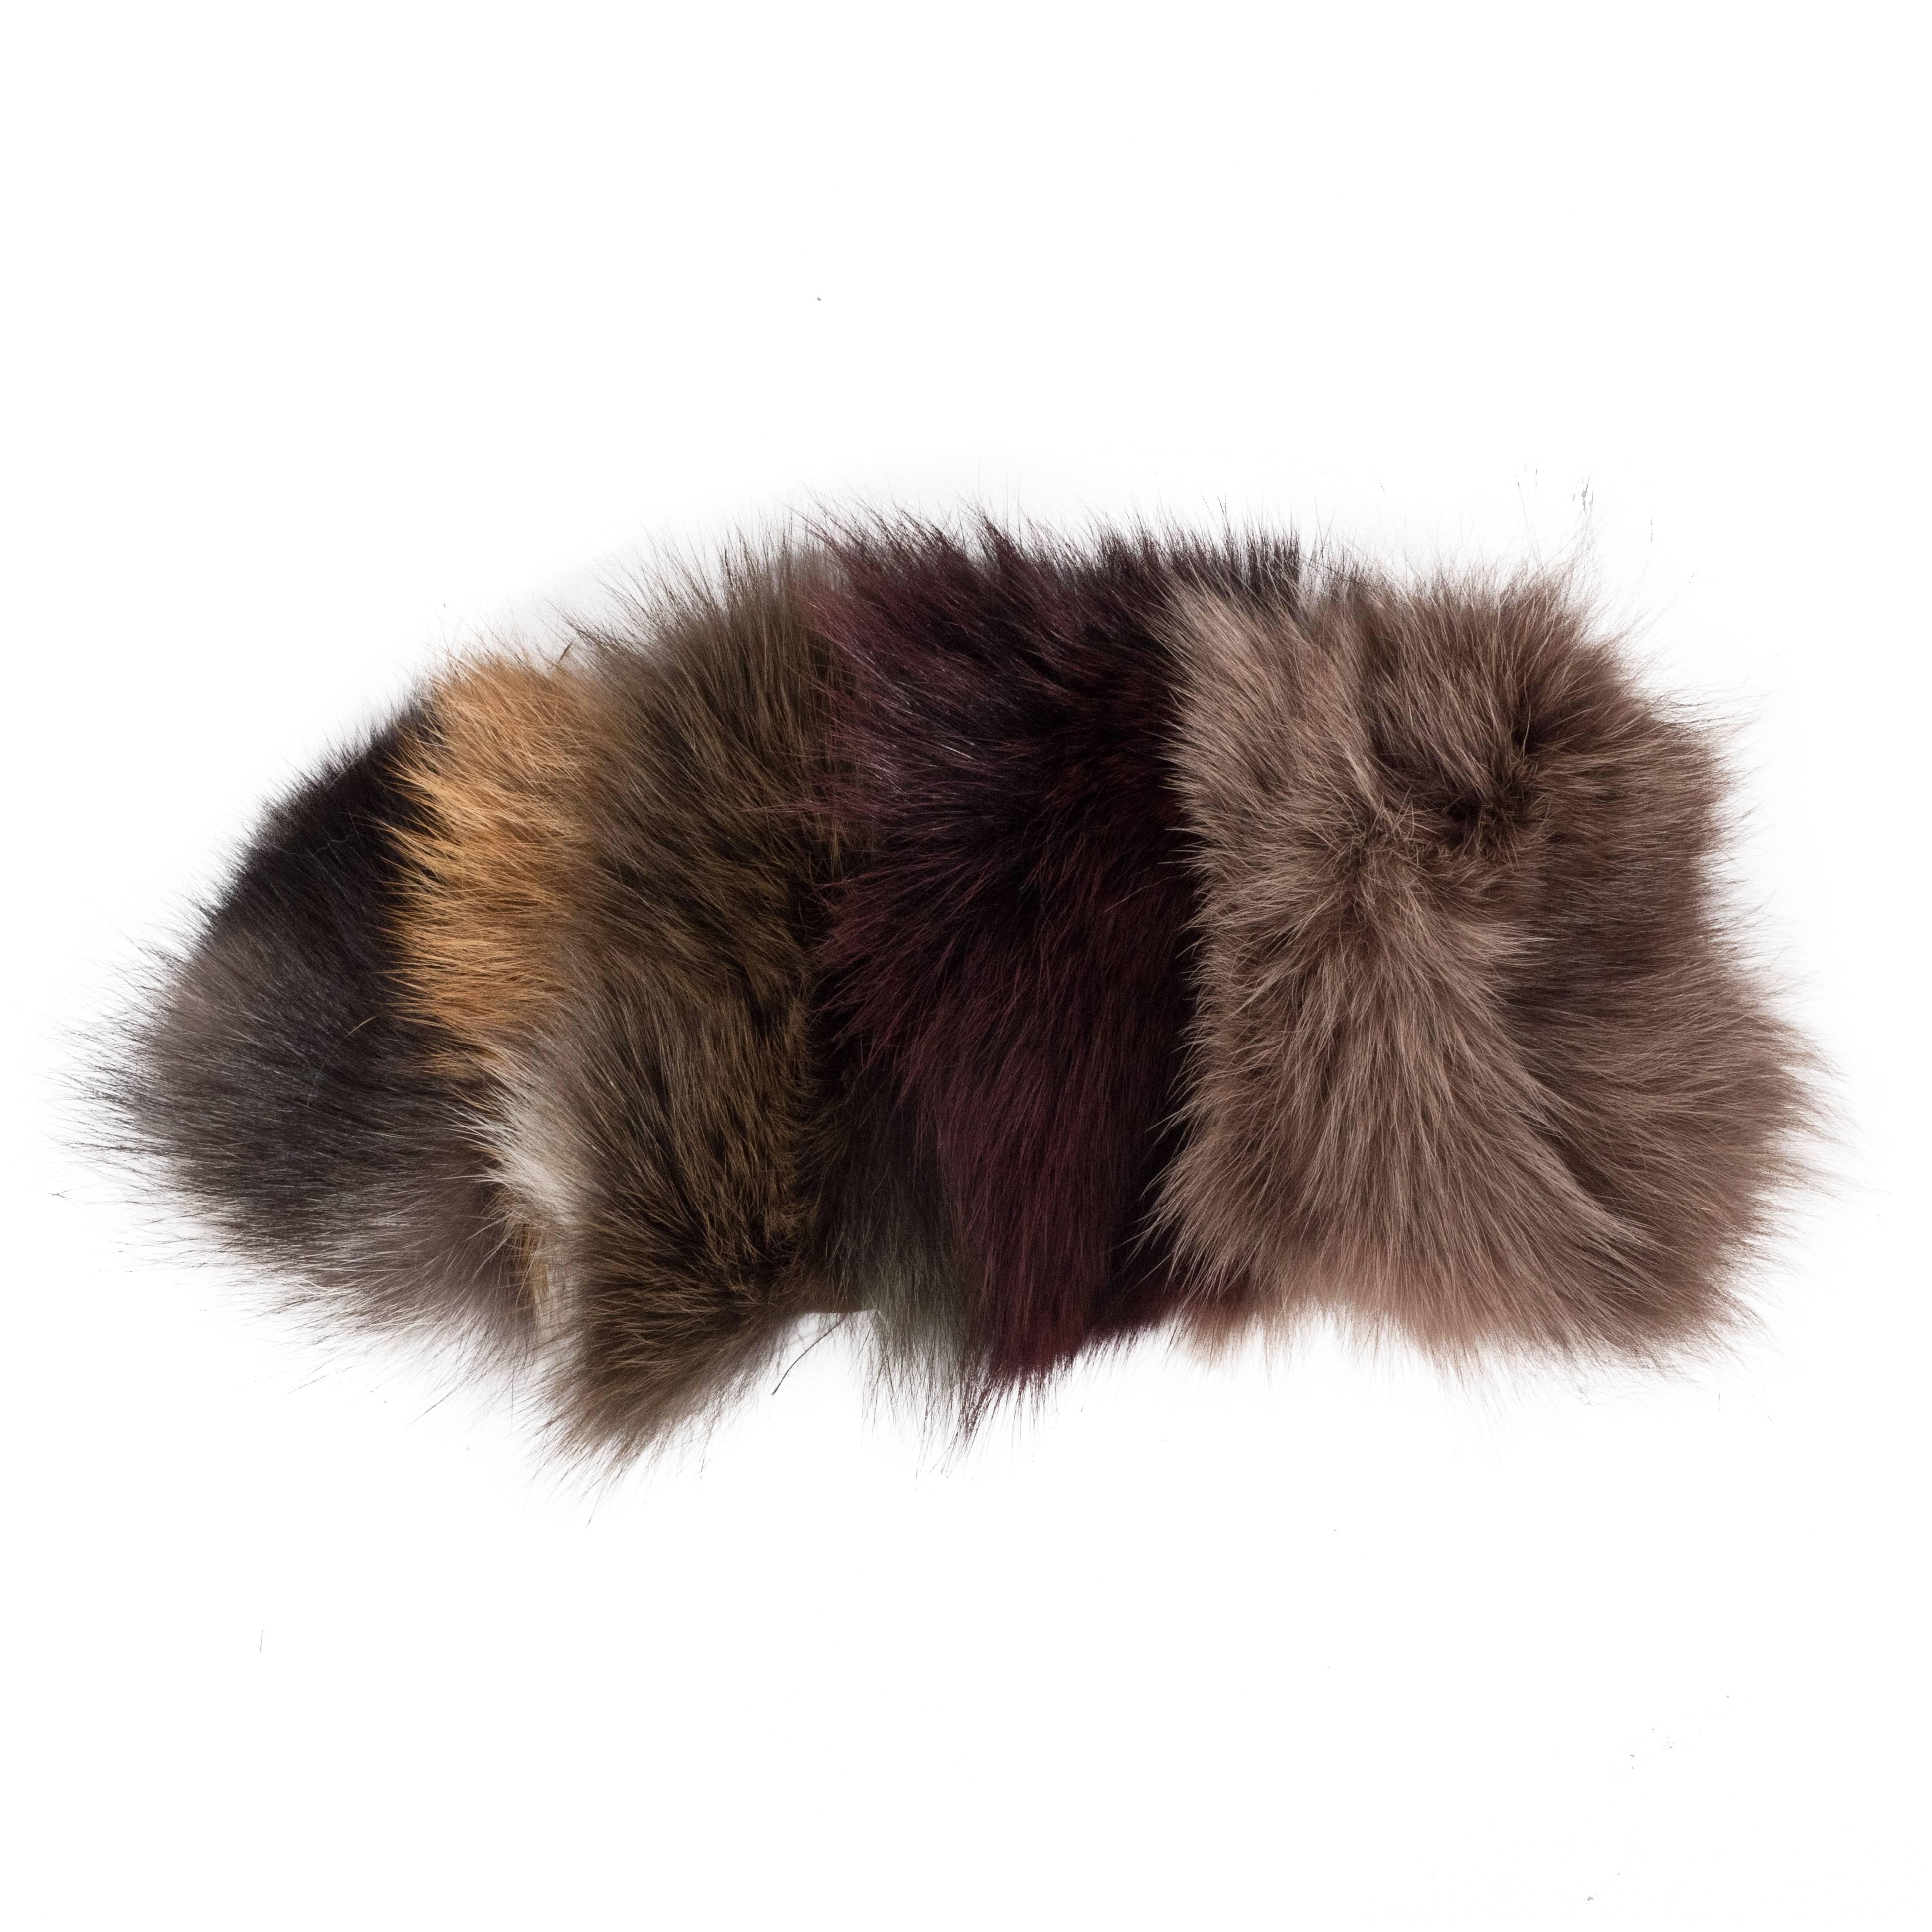 Luxurious Custom New Handmade Fox Fur Pillows in a Stunning Onyx Shade For Sale 2